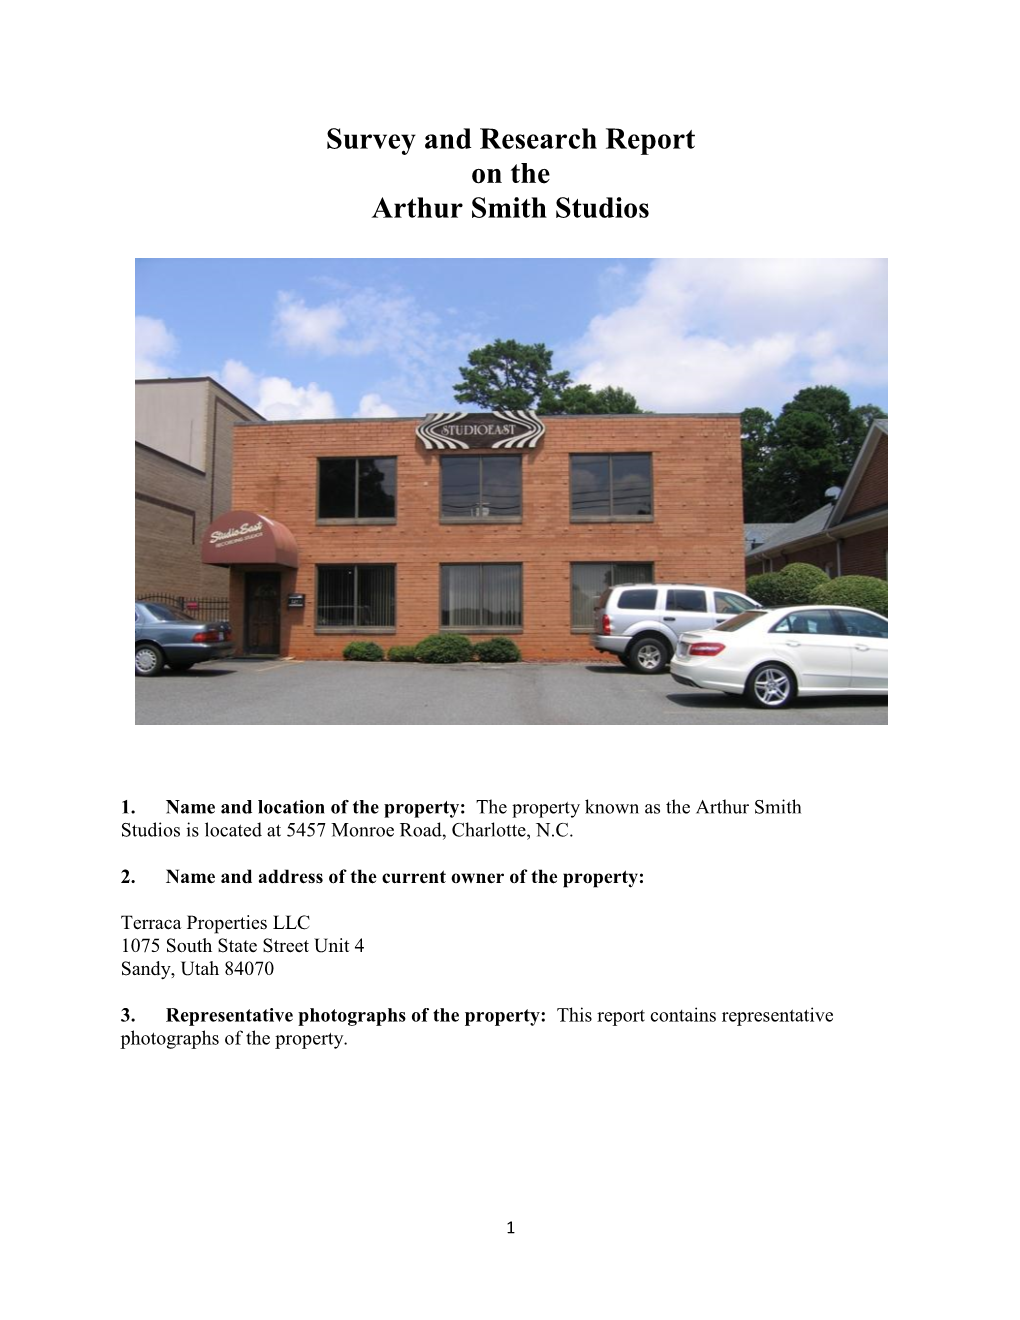 Arthur Smith Studios